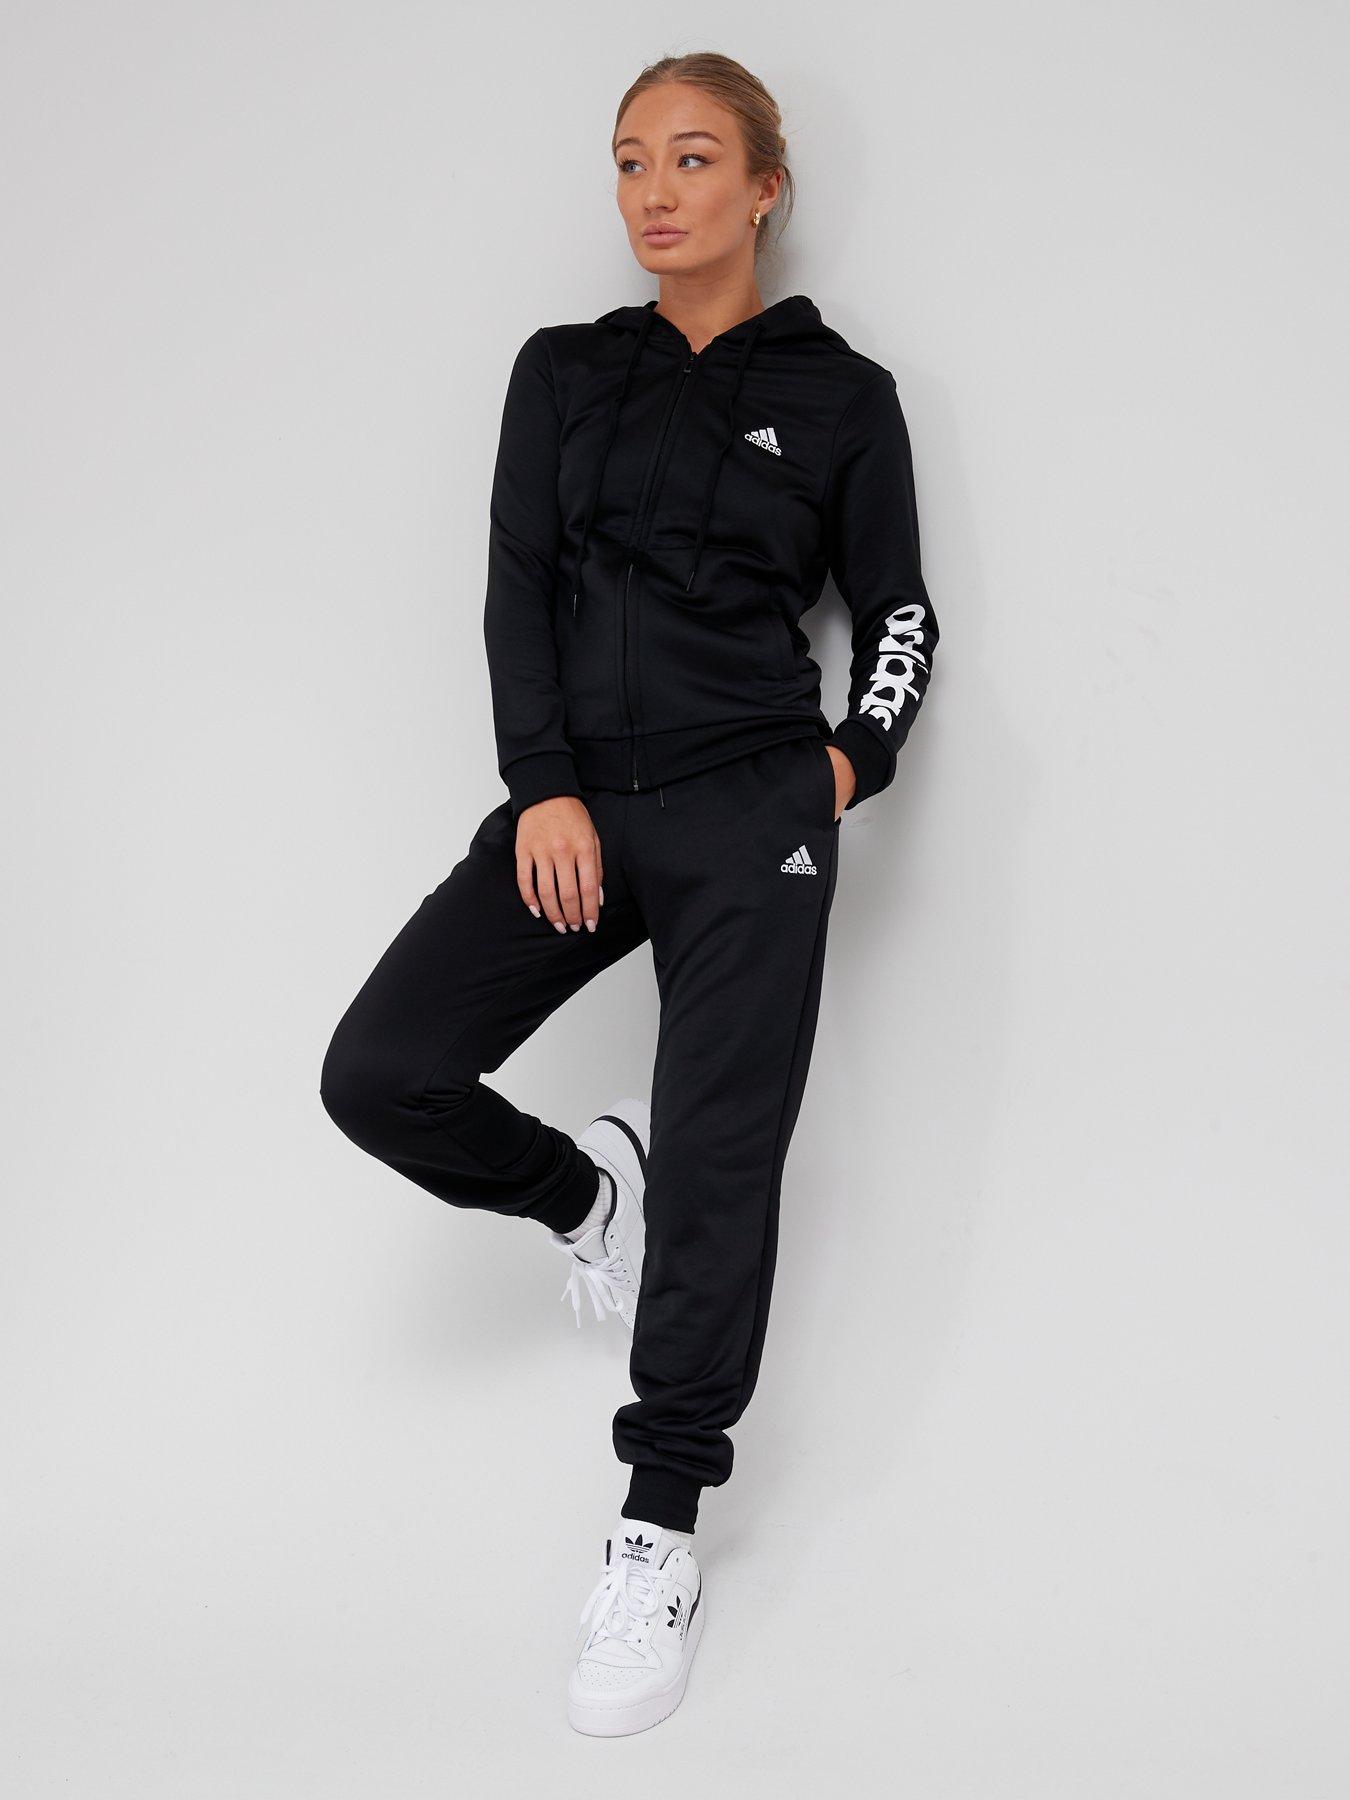 https://media.very.co.uk/i/very/VHZOR_SQ1_0000000019_BLACK_WHITE_MDf/adidas-sportswear-womens-linear-tracksuit-blackwhite.jpg?$180x240_retinamobilex2$